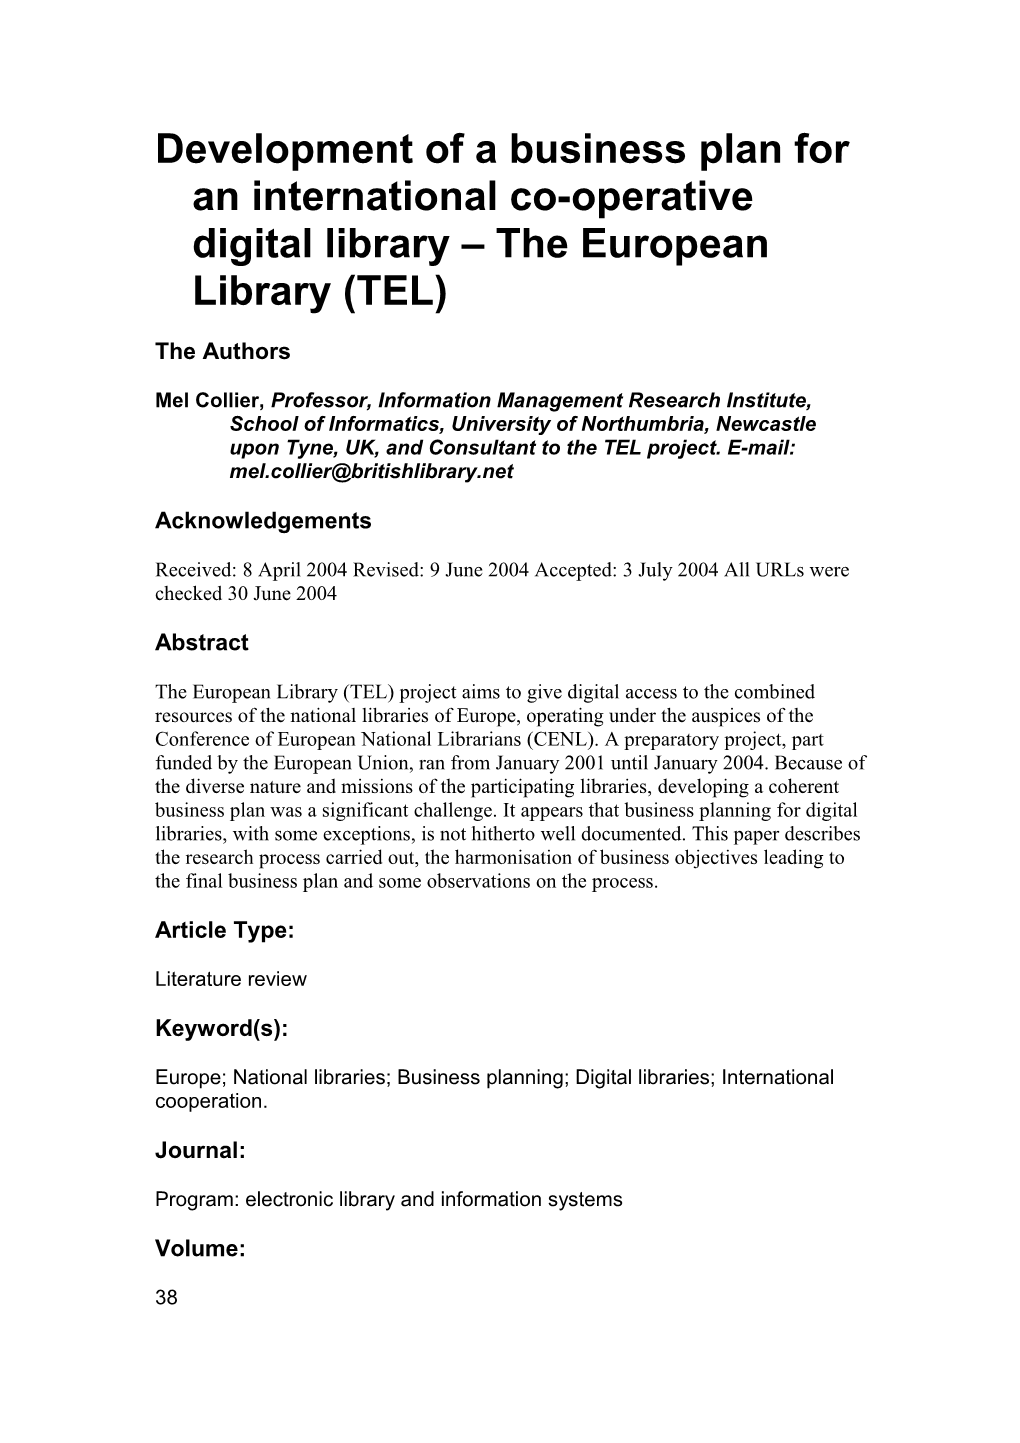 Development of a Business Plan for an International Co-Operative Digital Library the European